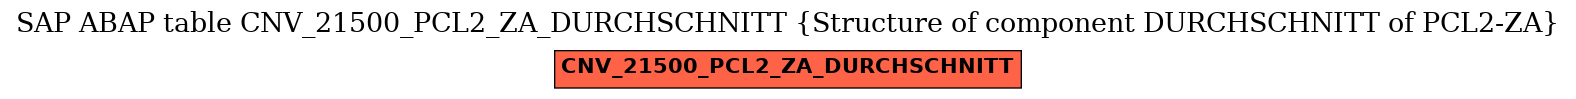 E-R Diagram for table CNV_21500_PCL2_ZA_DURCHSCHNITT (Structure of component DURCHSCHNITT of PCL2-ZA)